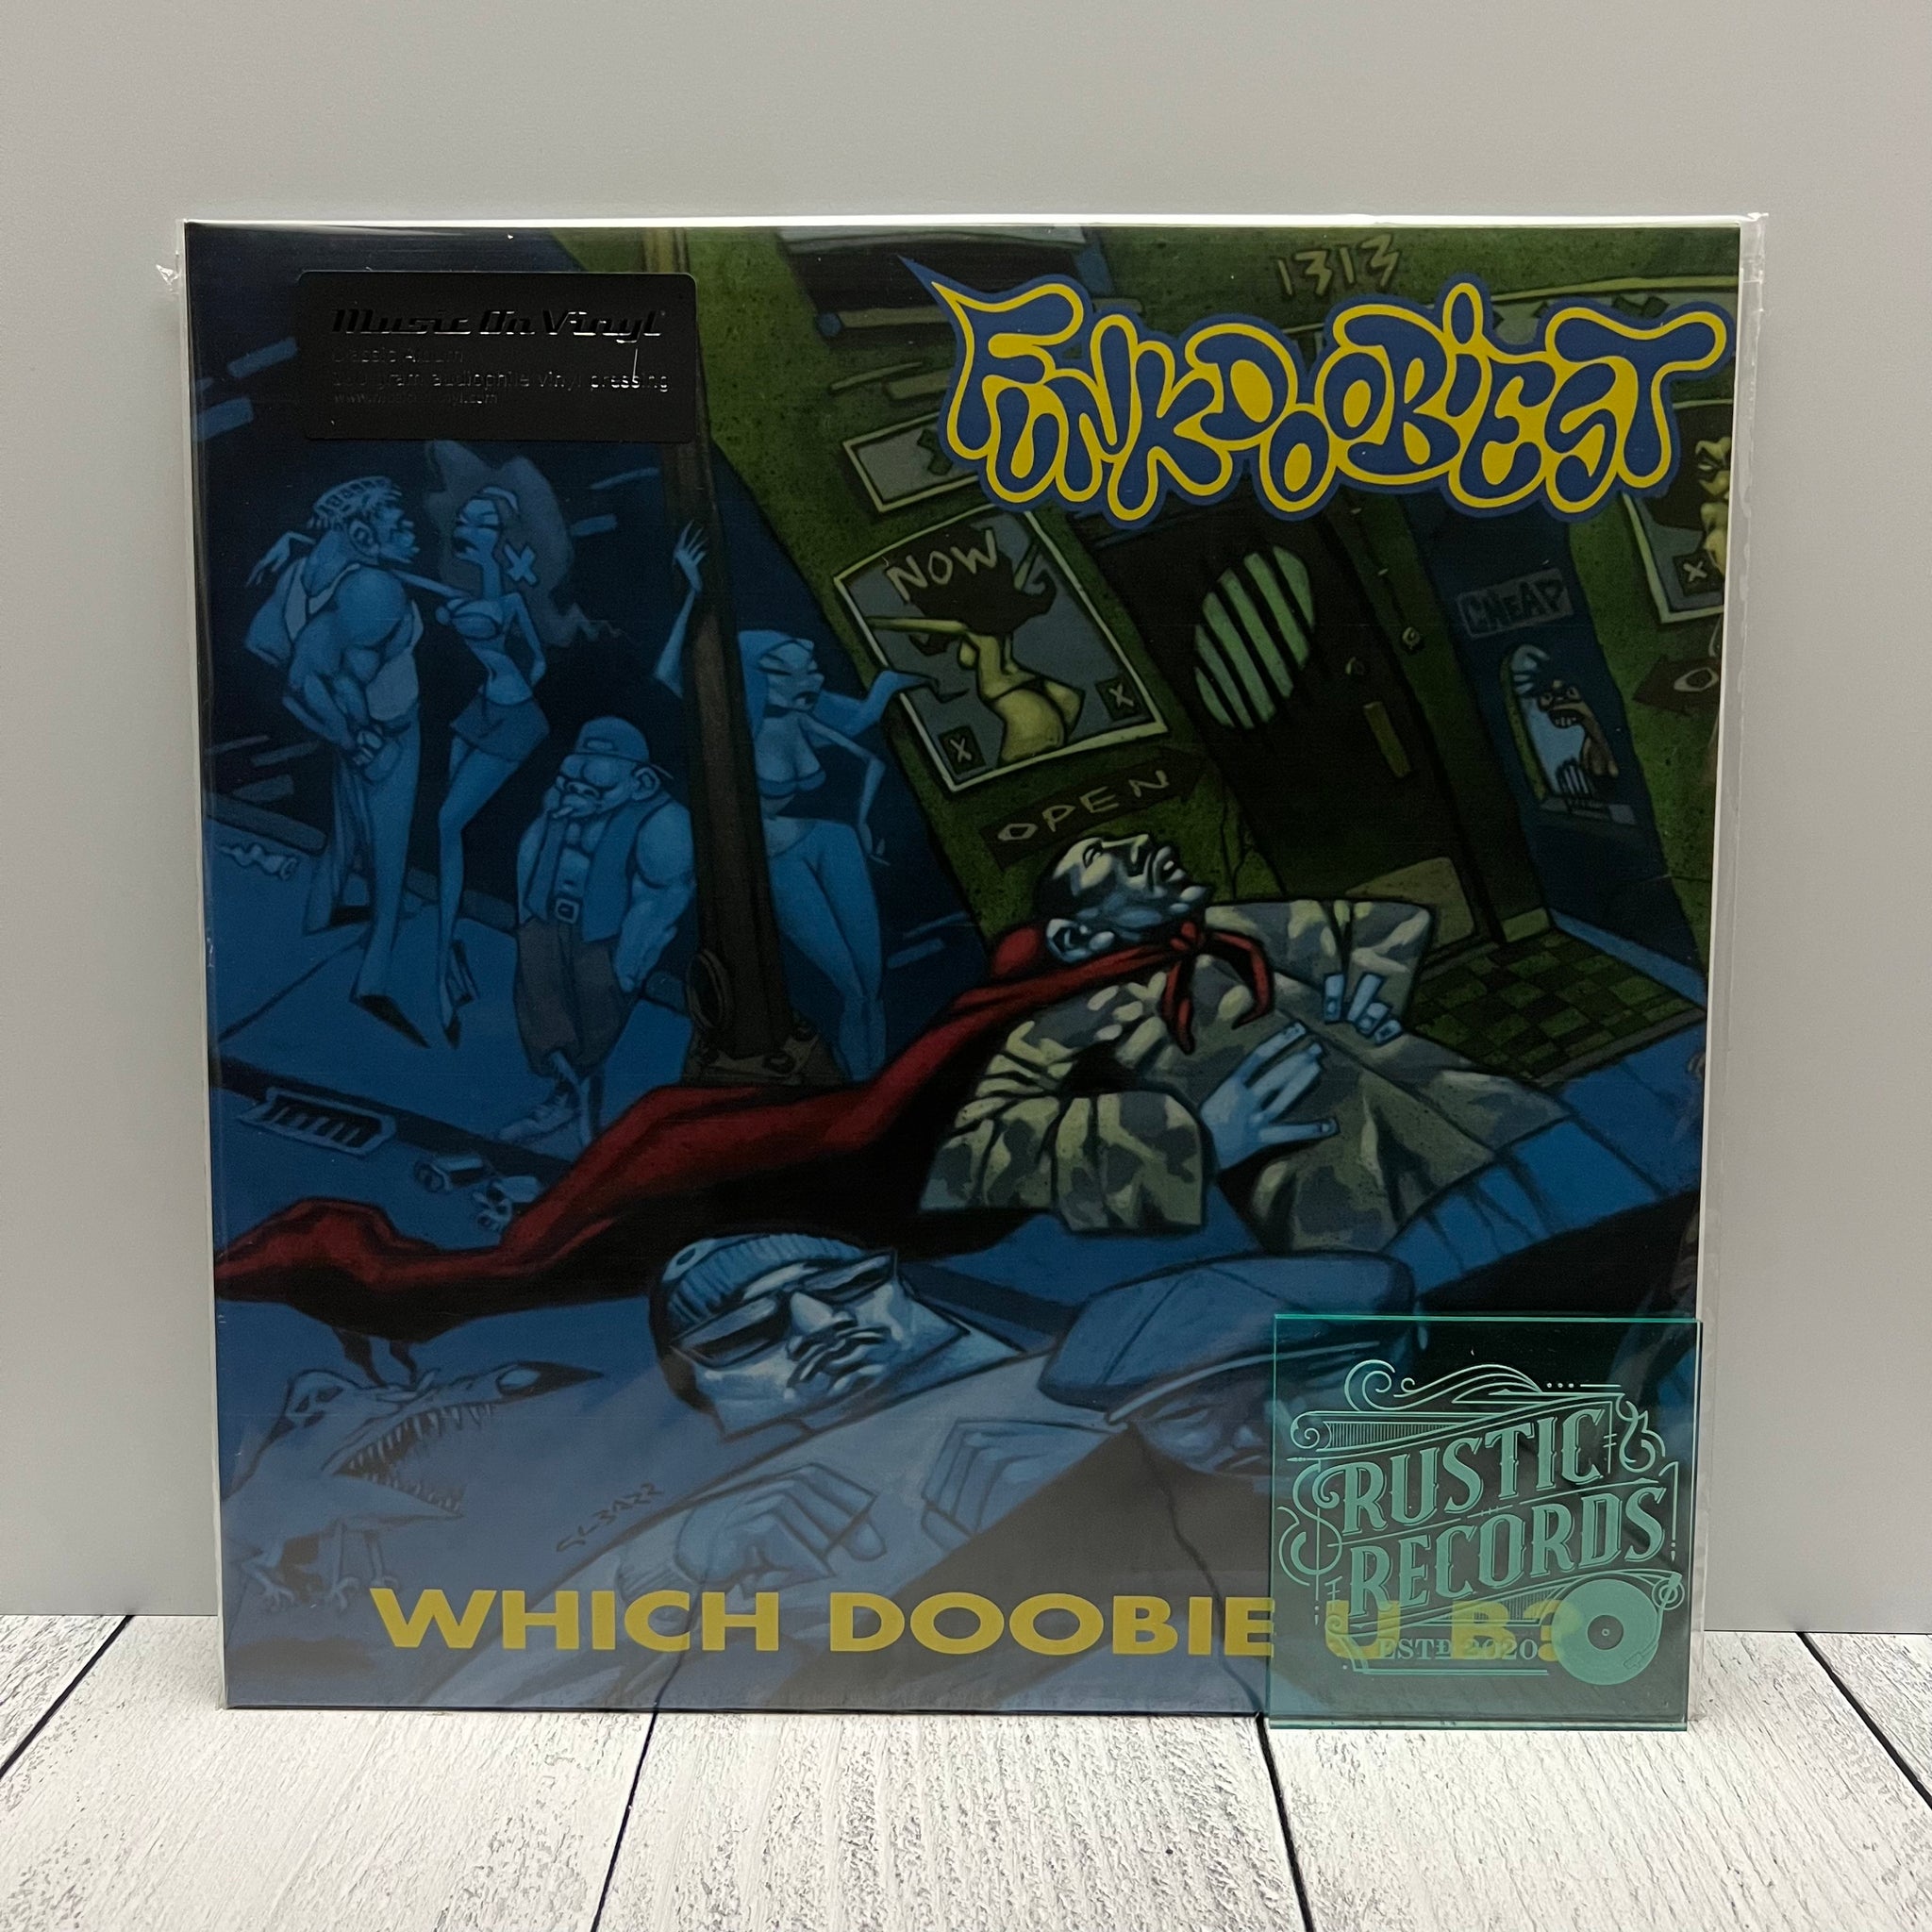 Funkdoobiest - Quel Doobie UB ? (Musique sur vinyle)